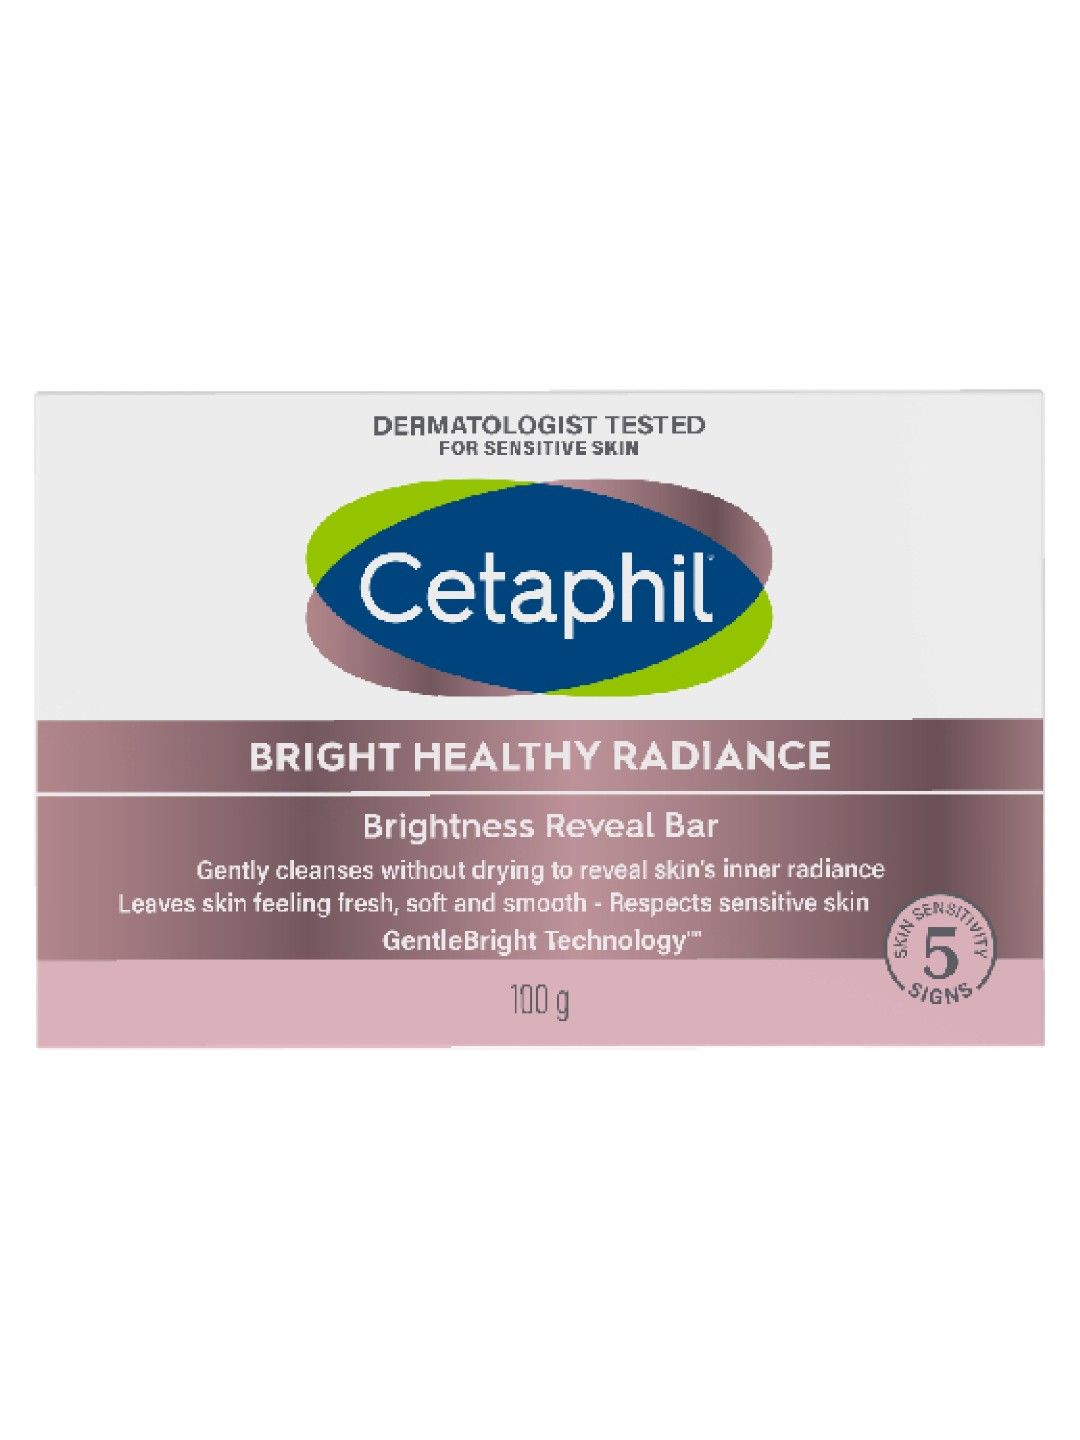 Cetaphil Brightness Reveal Bar (100g)